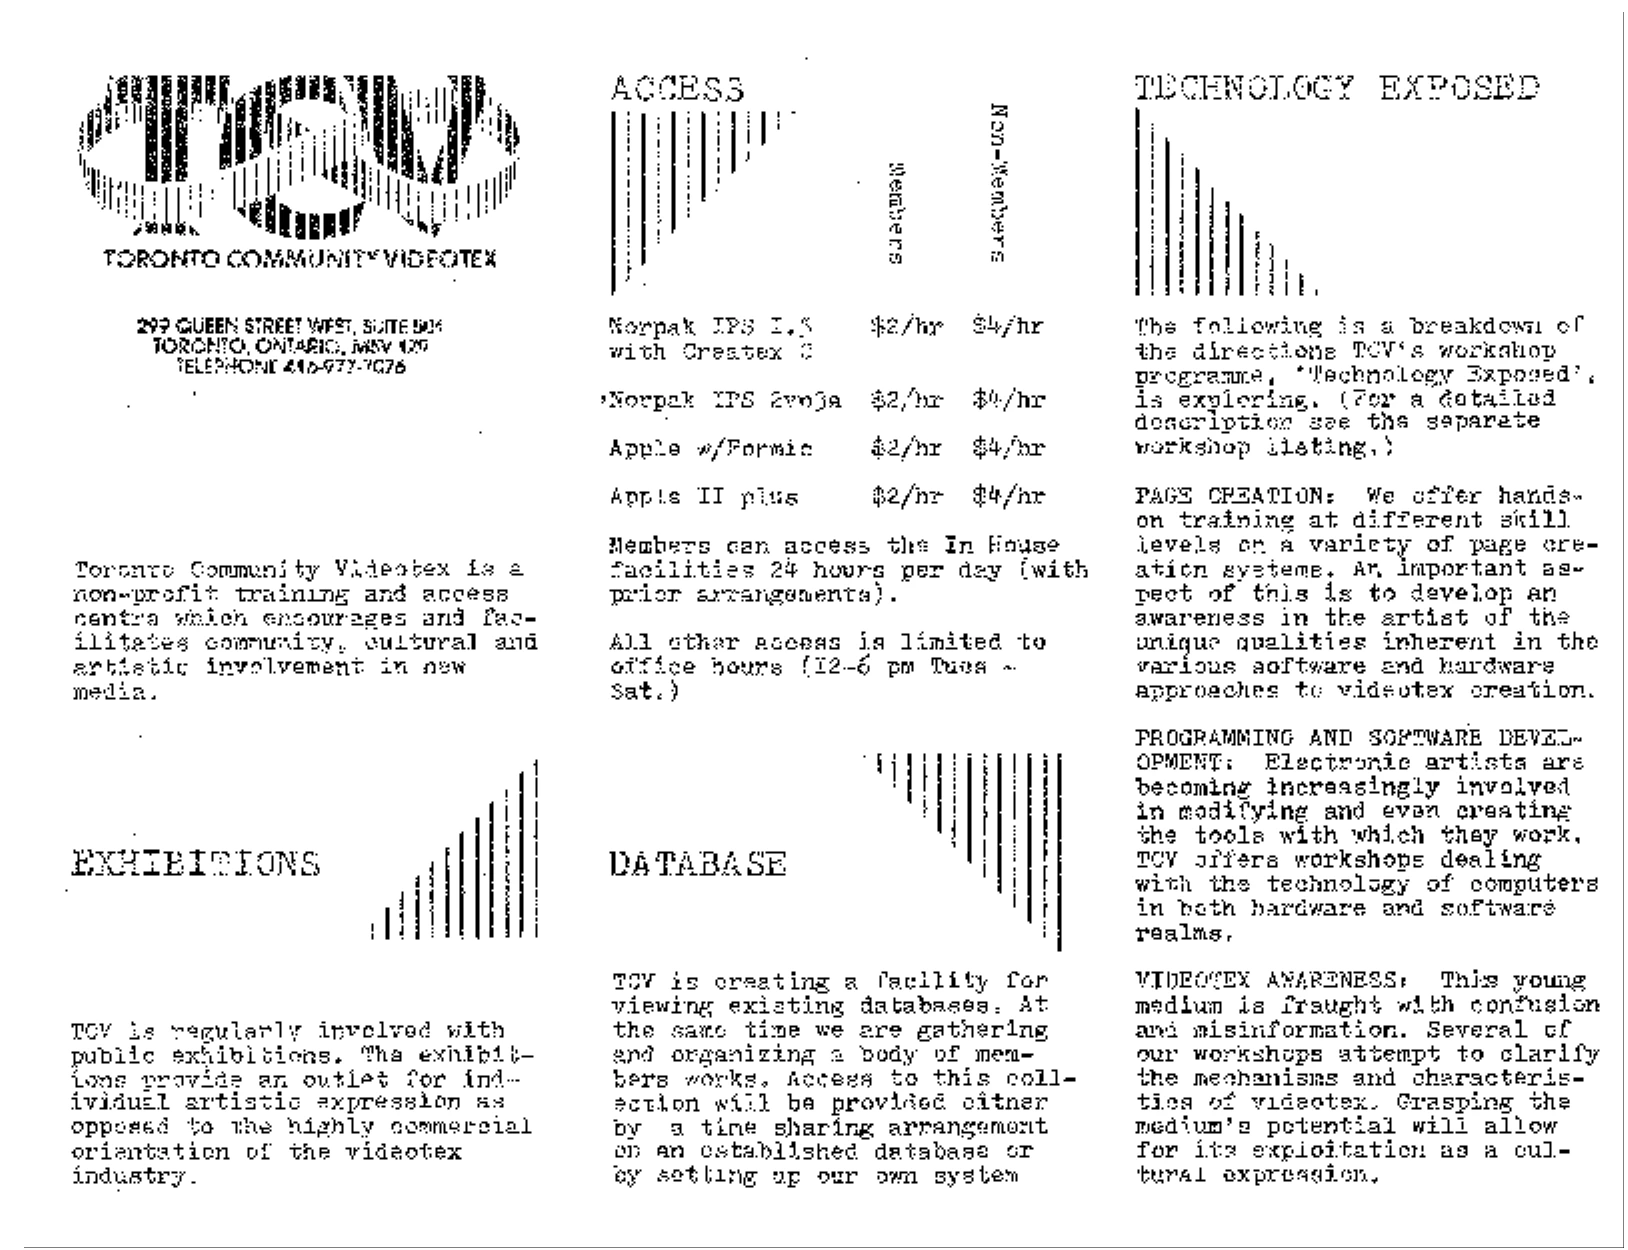 New Media Art Pamphlet, Toronto Community Videotex, Canada, 1984.